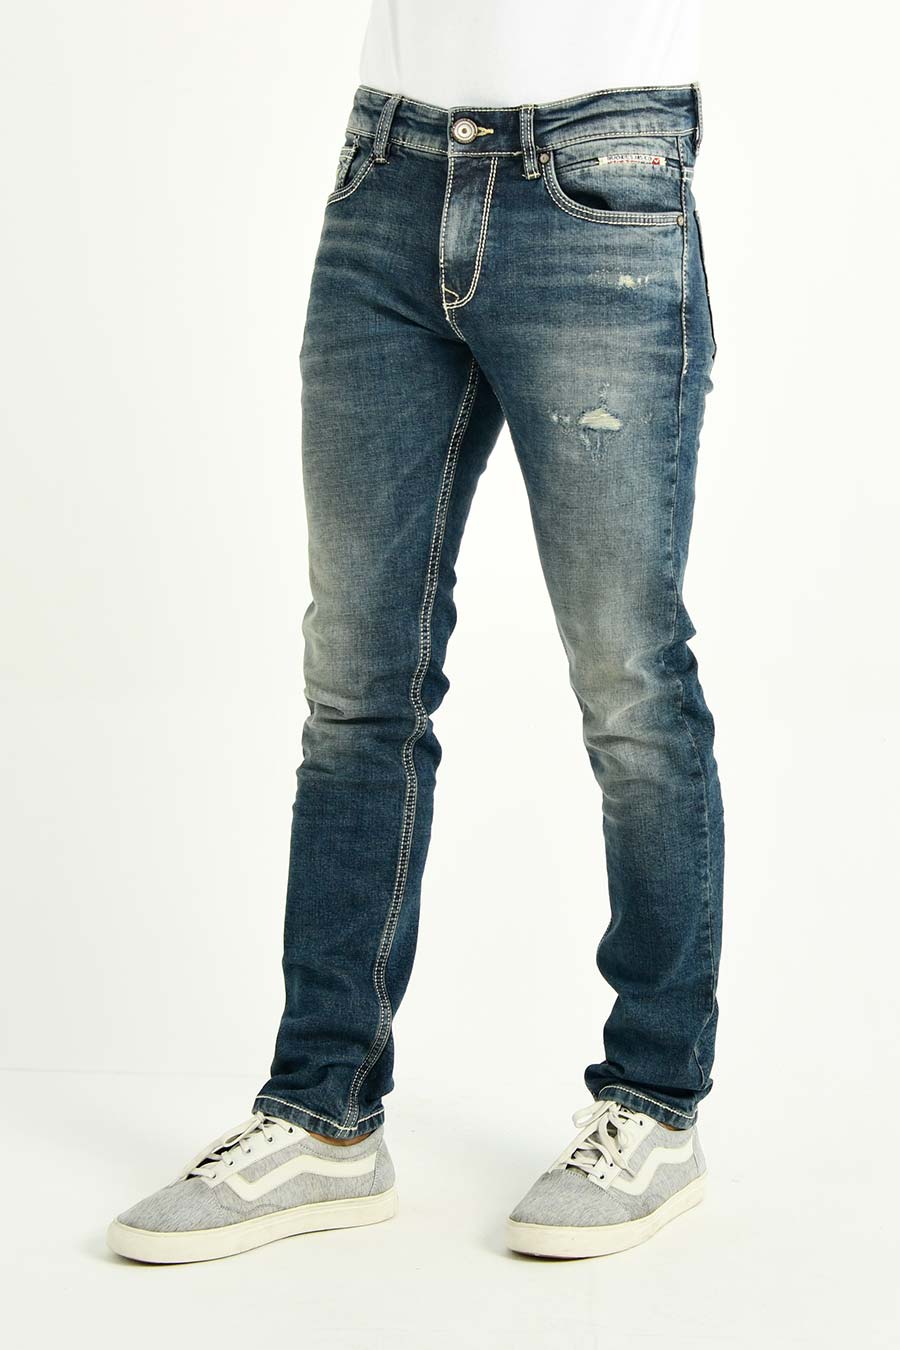 Men’s Denim Jeans-RJ4020